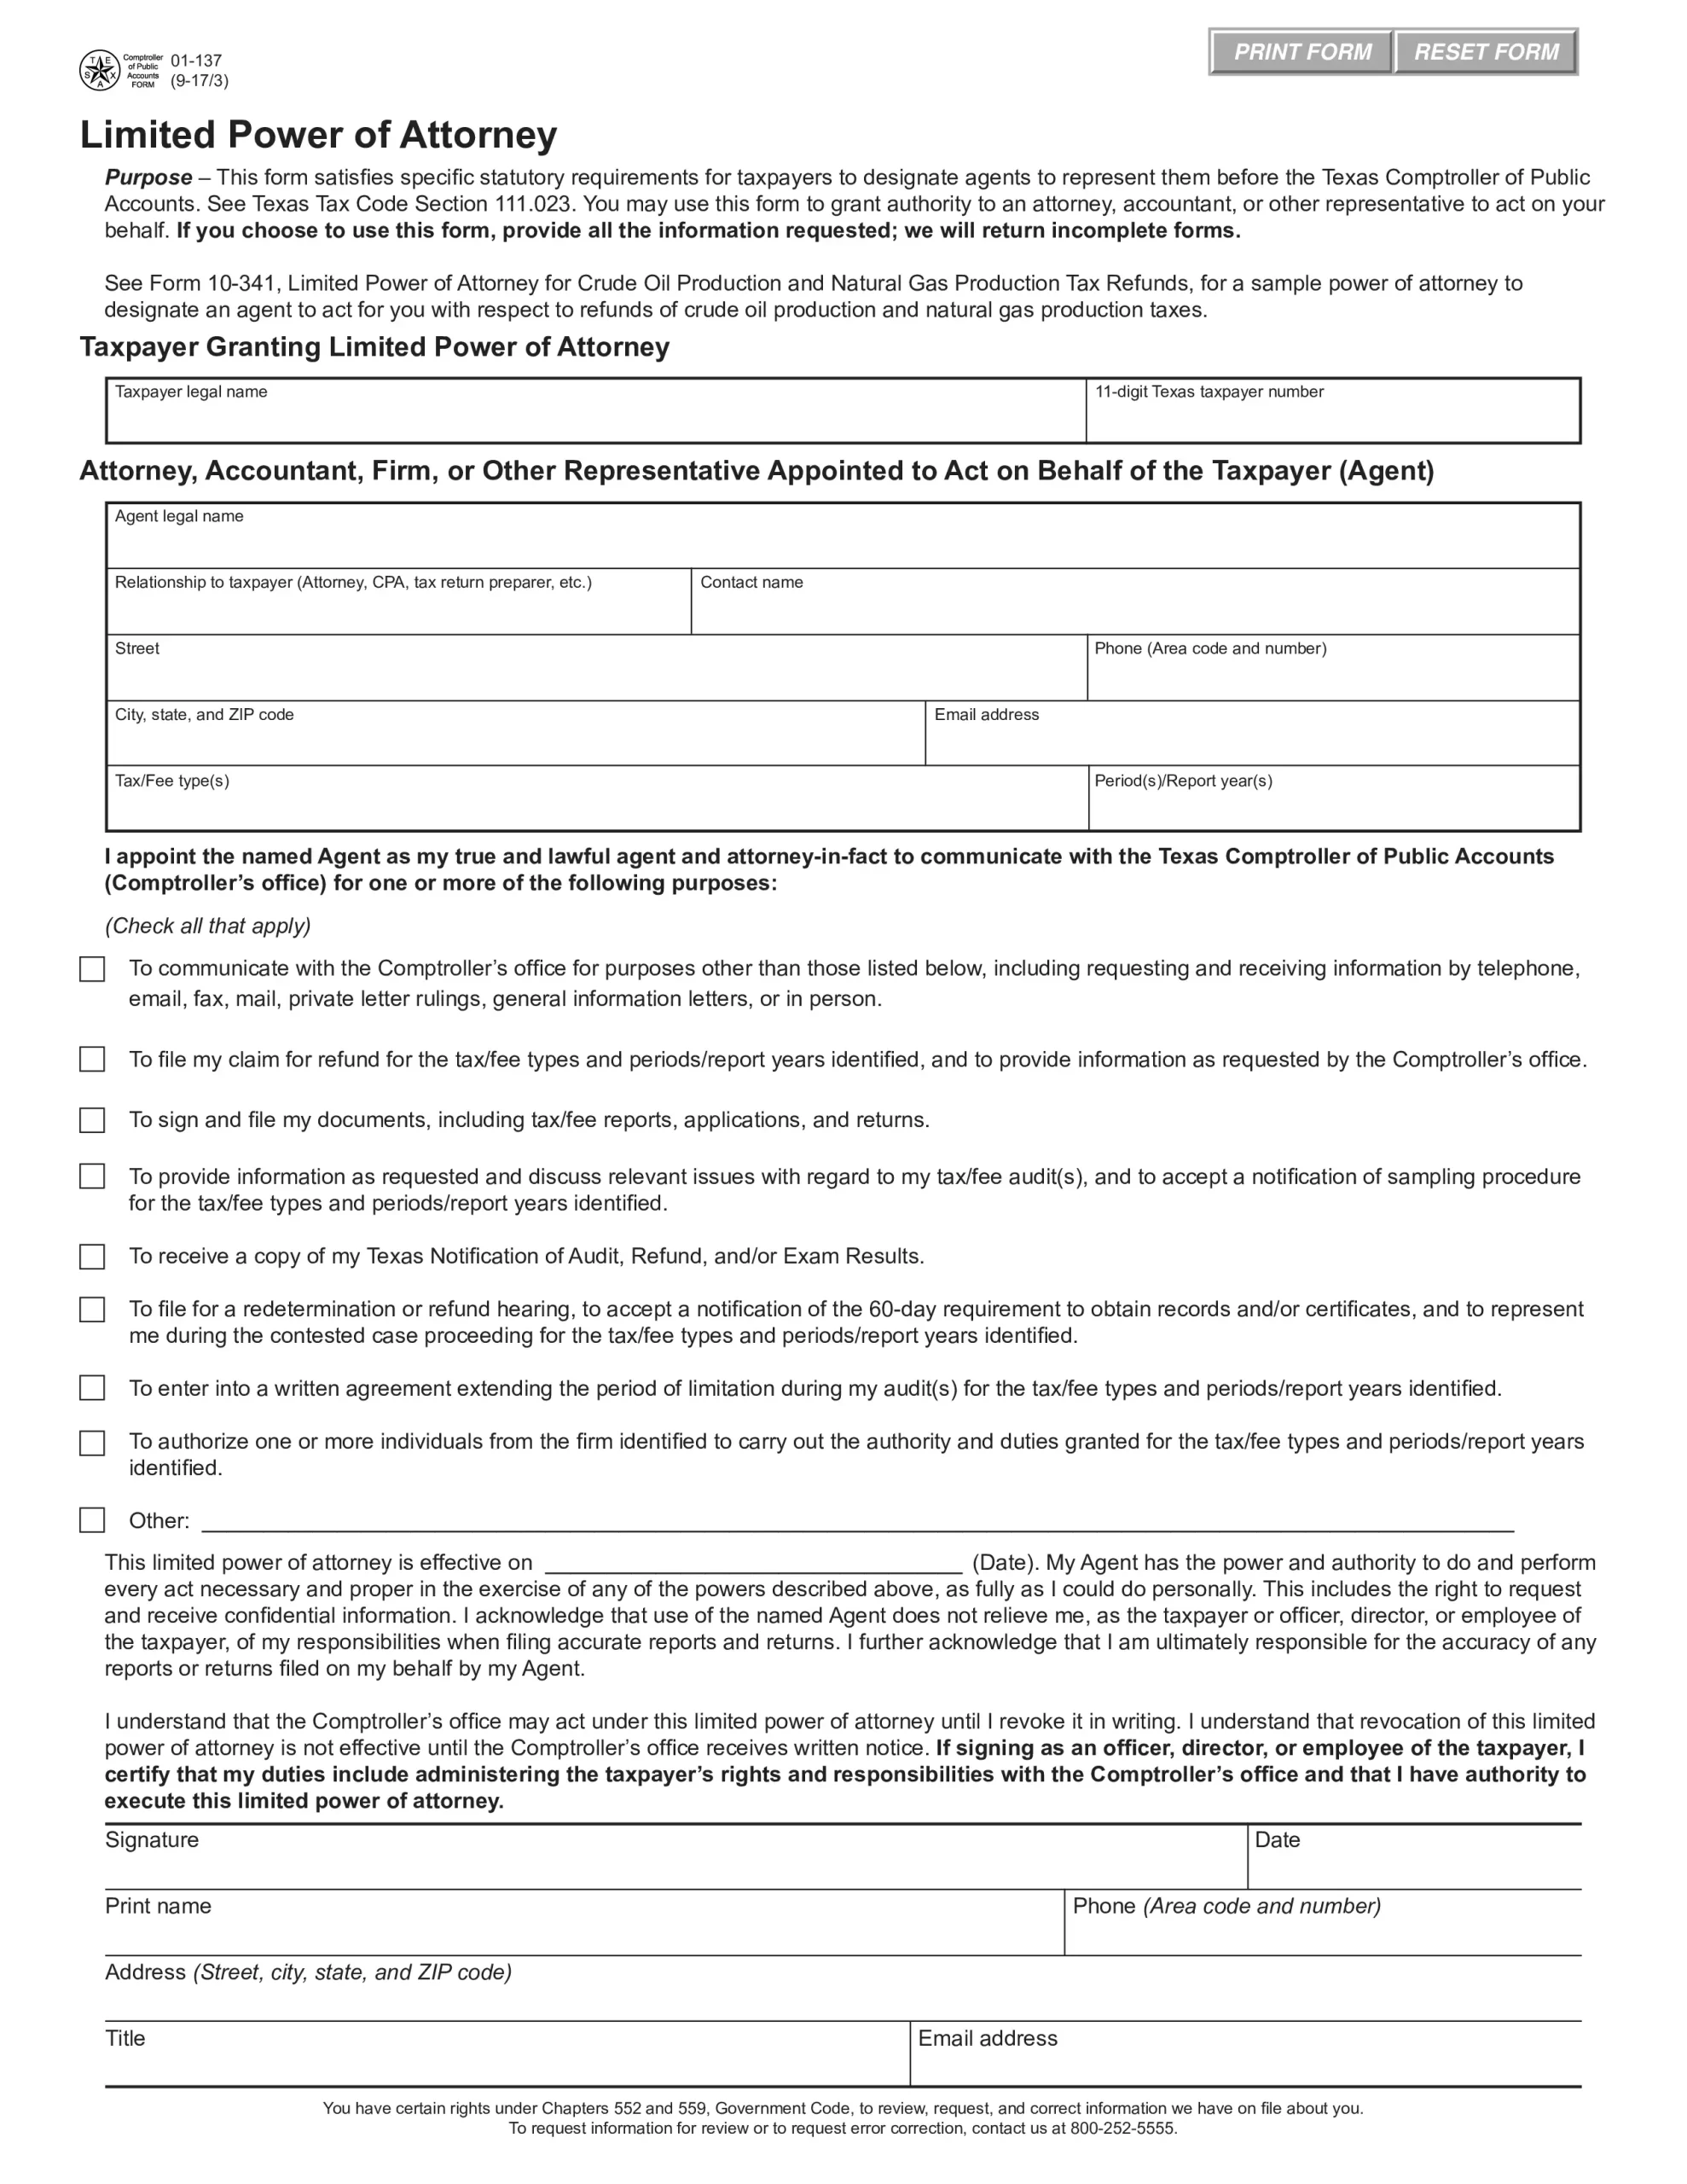 texas tax POA form 01 137 preview